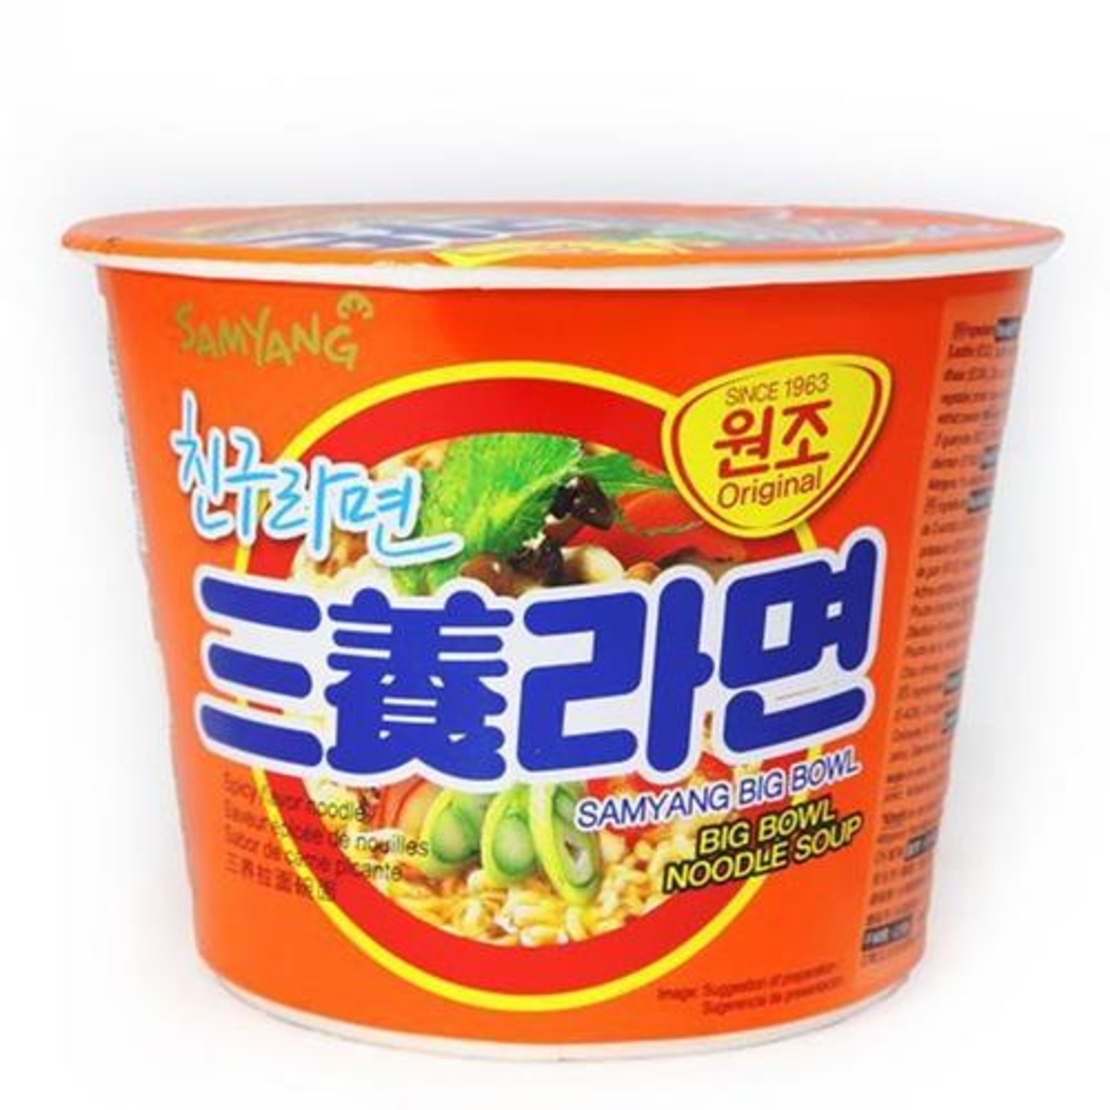 Samyang - Spicy flavor Big Bowl